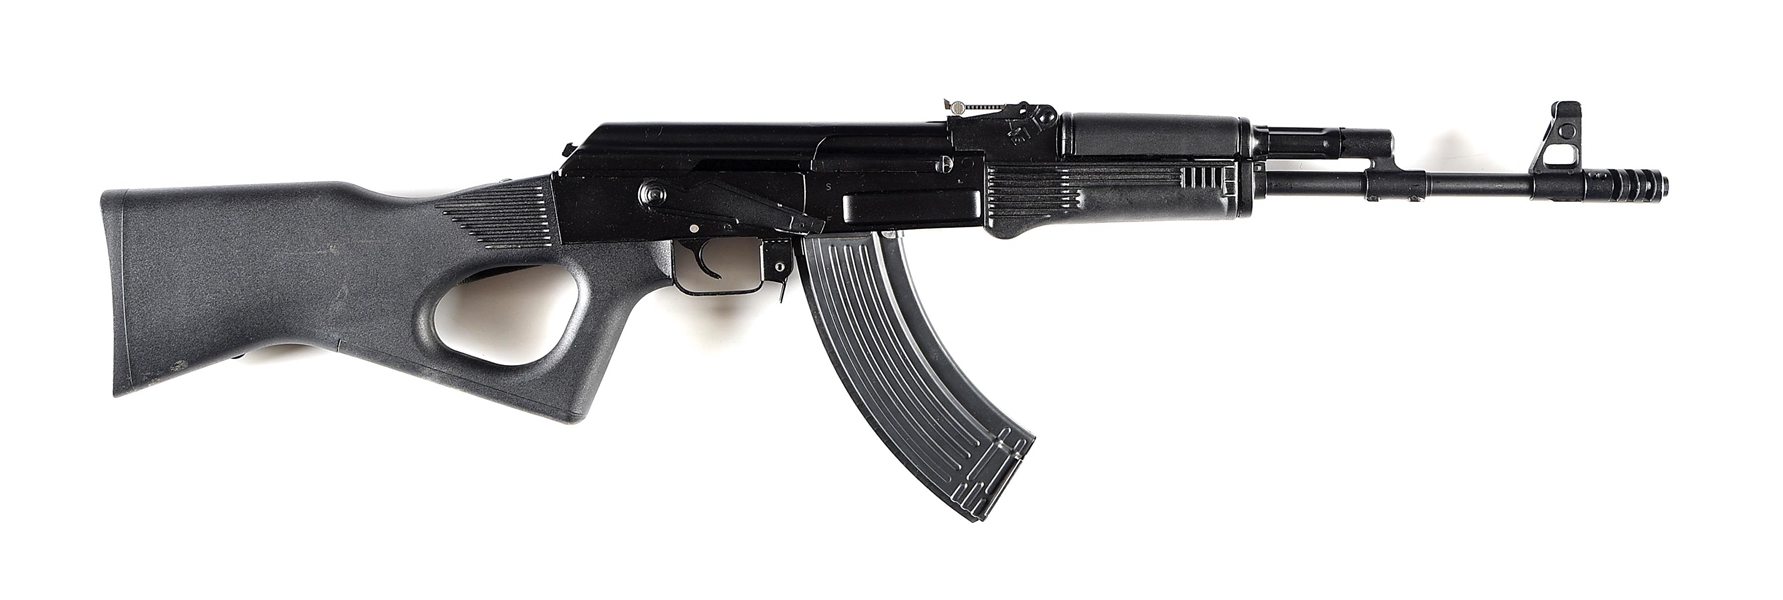 (M) ALWAYS DESIRABLE ARSENAL SLR-95 AK PATTERN SEMI-AUTOMATIC RIFLE.